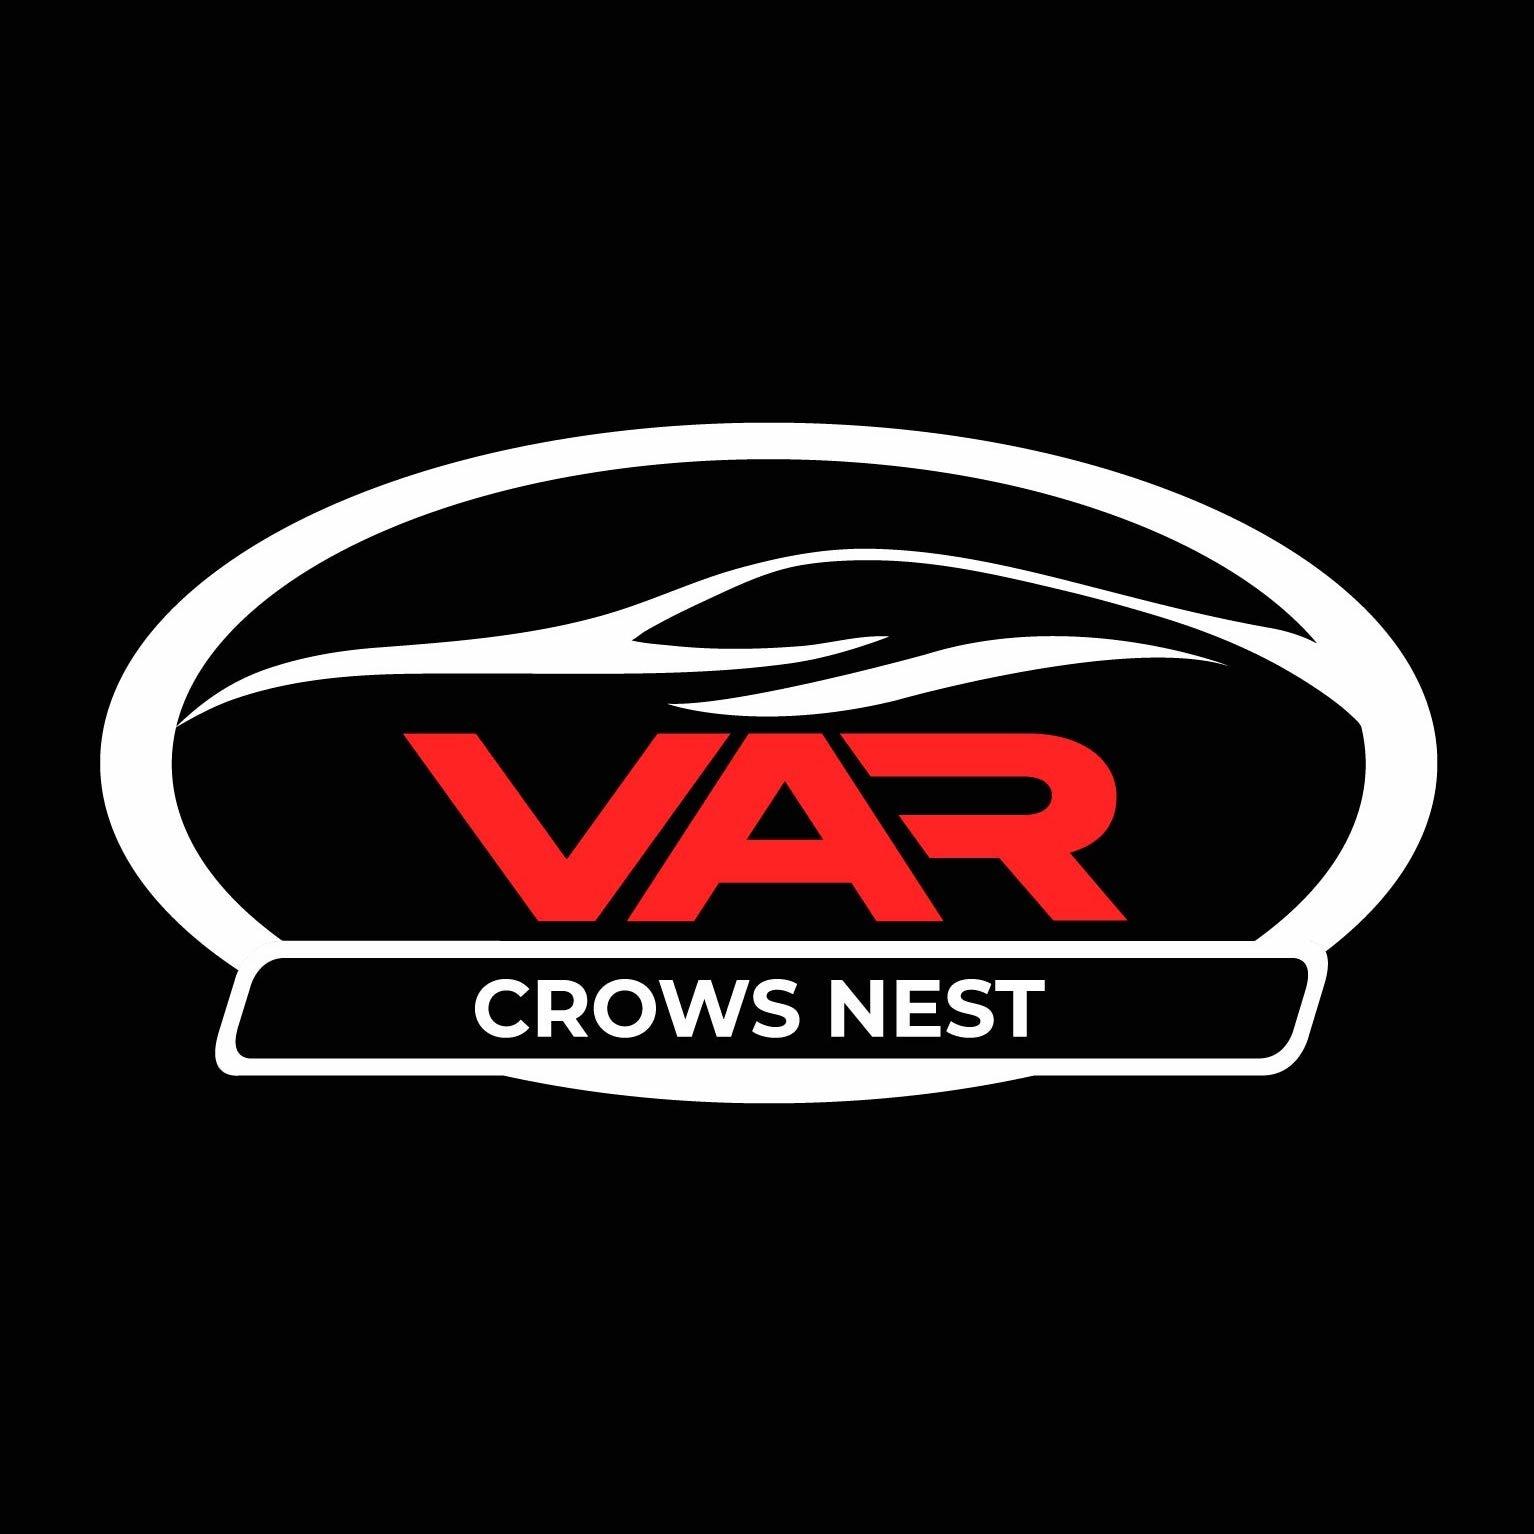 V.A.R Crows Nest – Car Service, Mechanics & Repairs, Sydney North Shore North Sydney